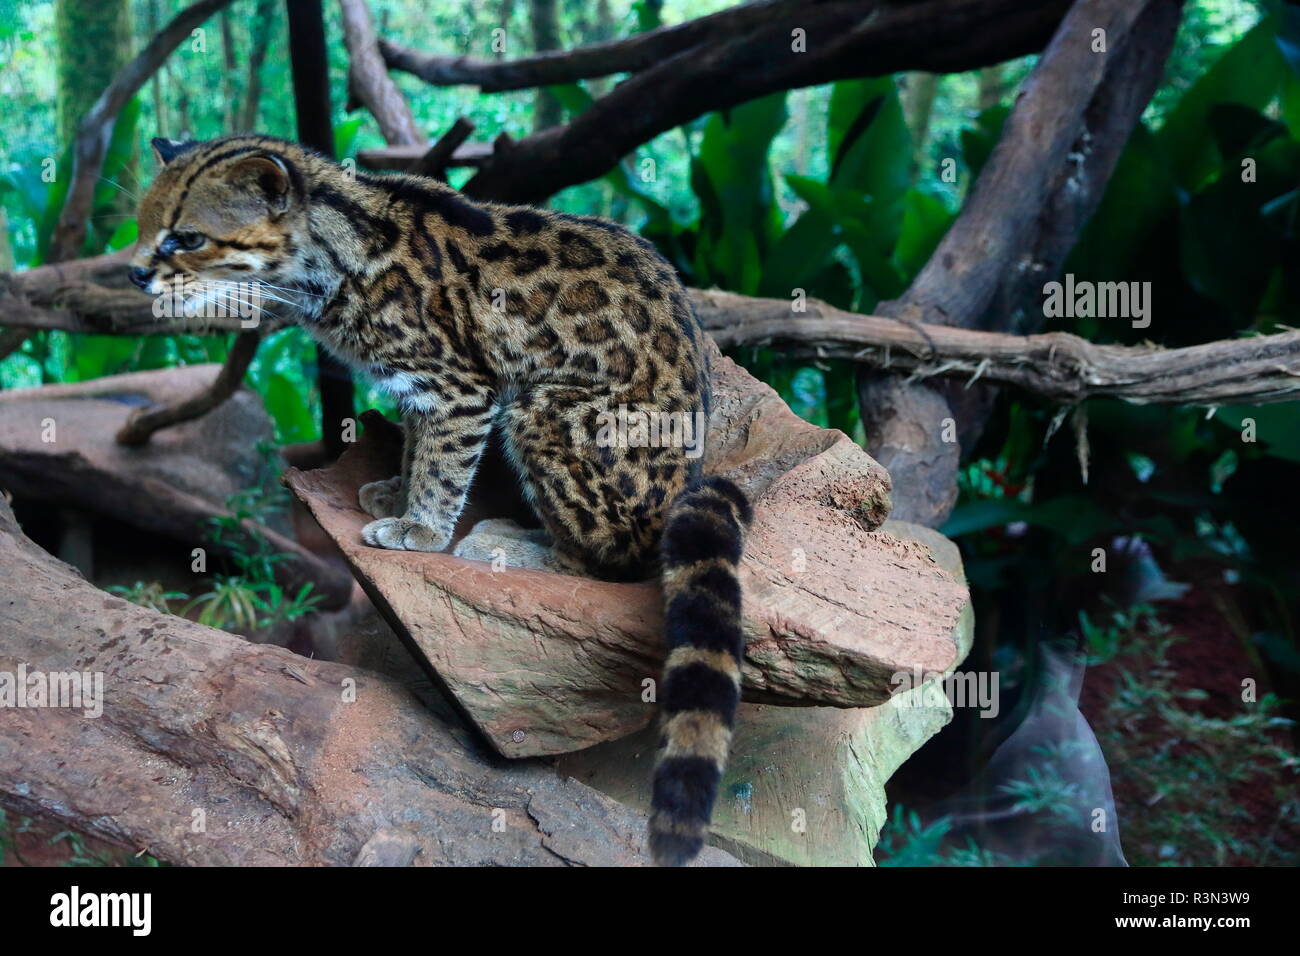 Oncilla (Leopardus tigrinus) on rock, Costa Rica Stock Photo